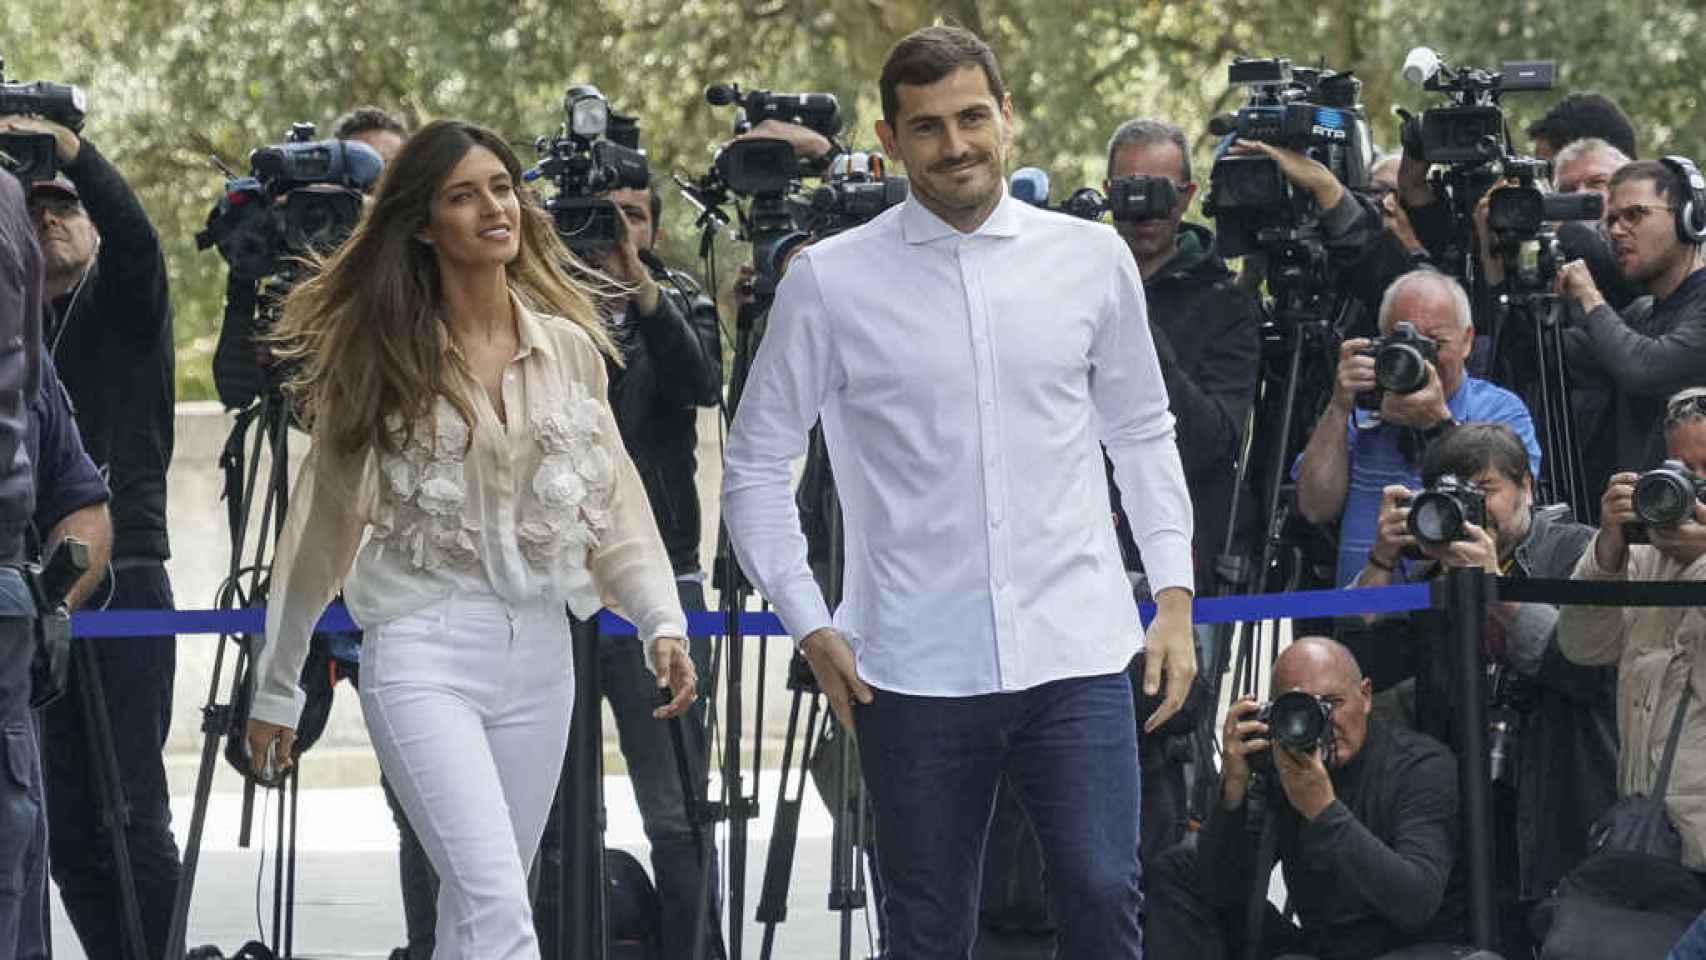 Sara e Iker en una imagen en mayo de 2019 a la salida del hospital en Portugal.